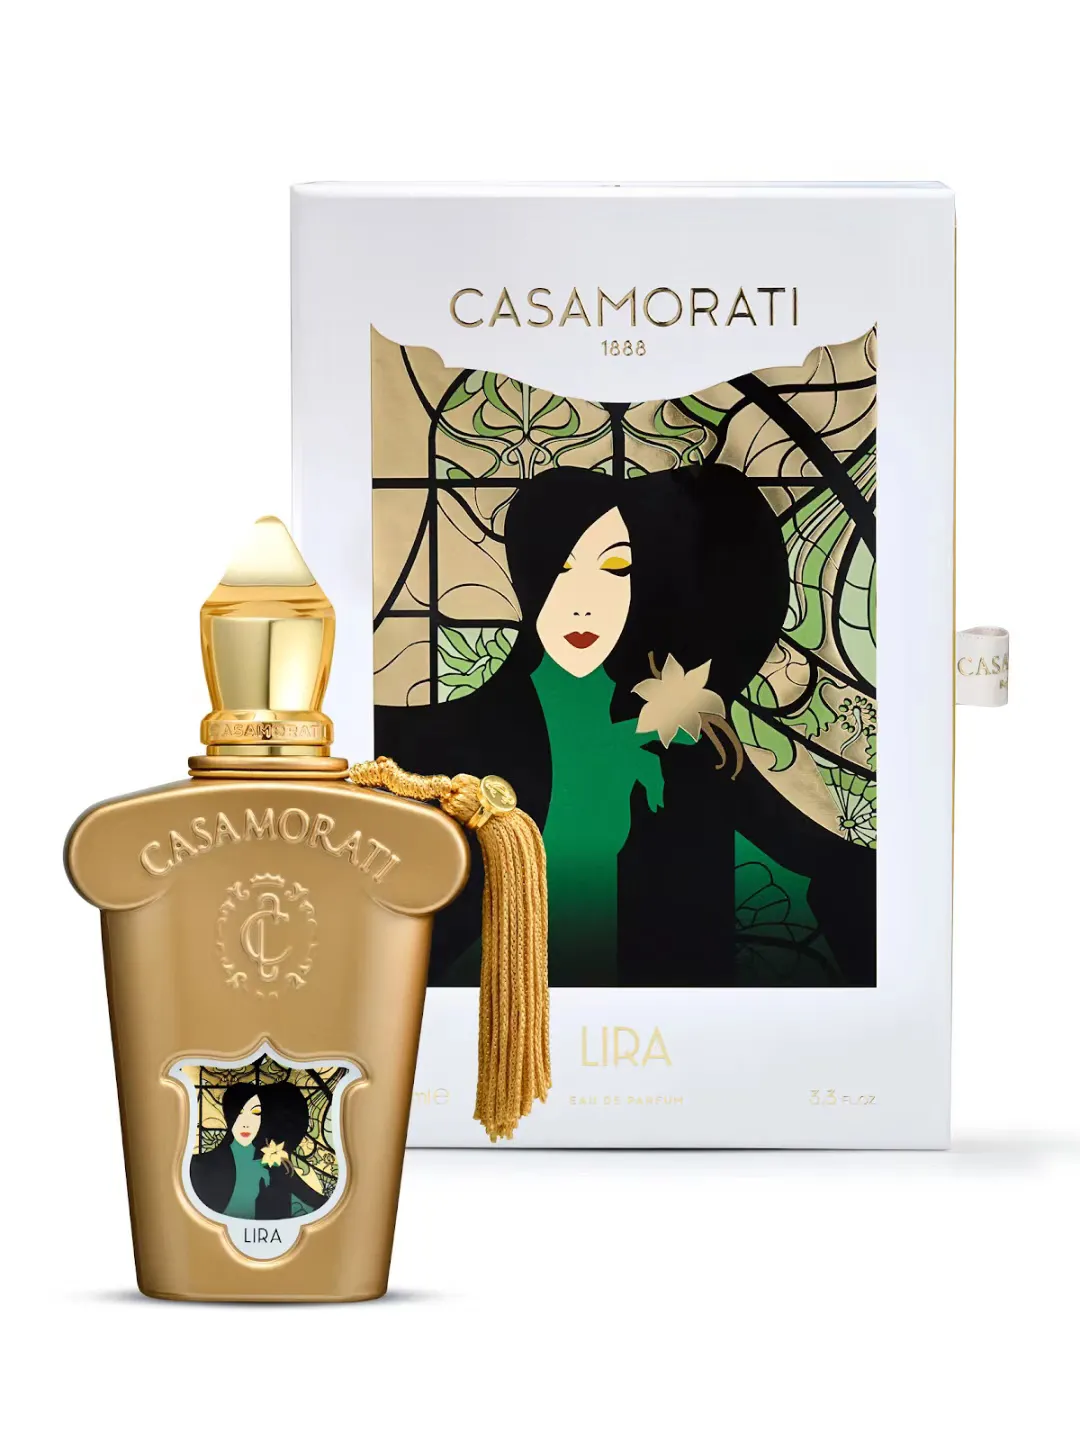 Casamorati Dal1888 Perfume 100ml Mefisto Lira Bouquet Ideale La Tosca 1888 Fragrance Eau De Parfum Long Lasting Smell EDP Men Women Xerjoff Cologne Spray aaa3